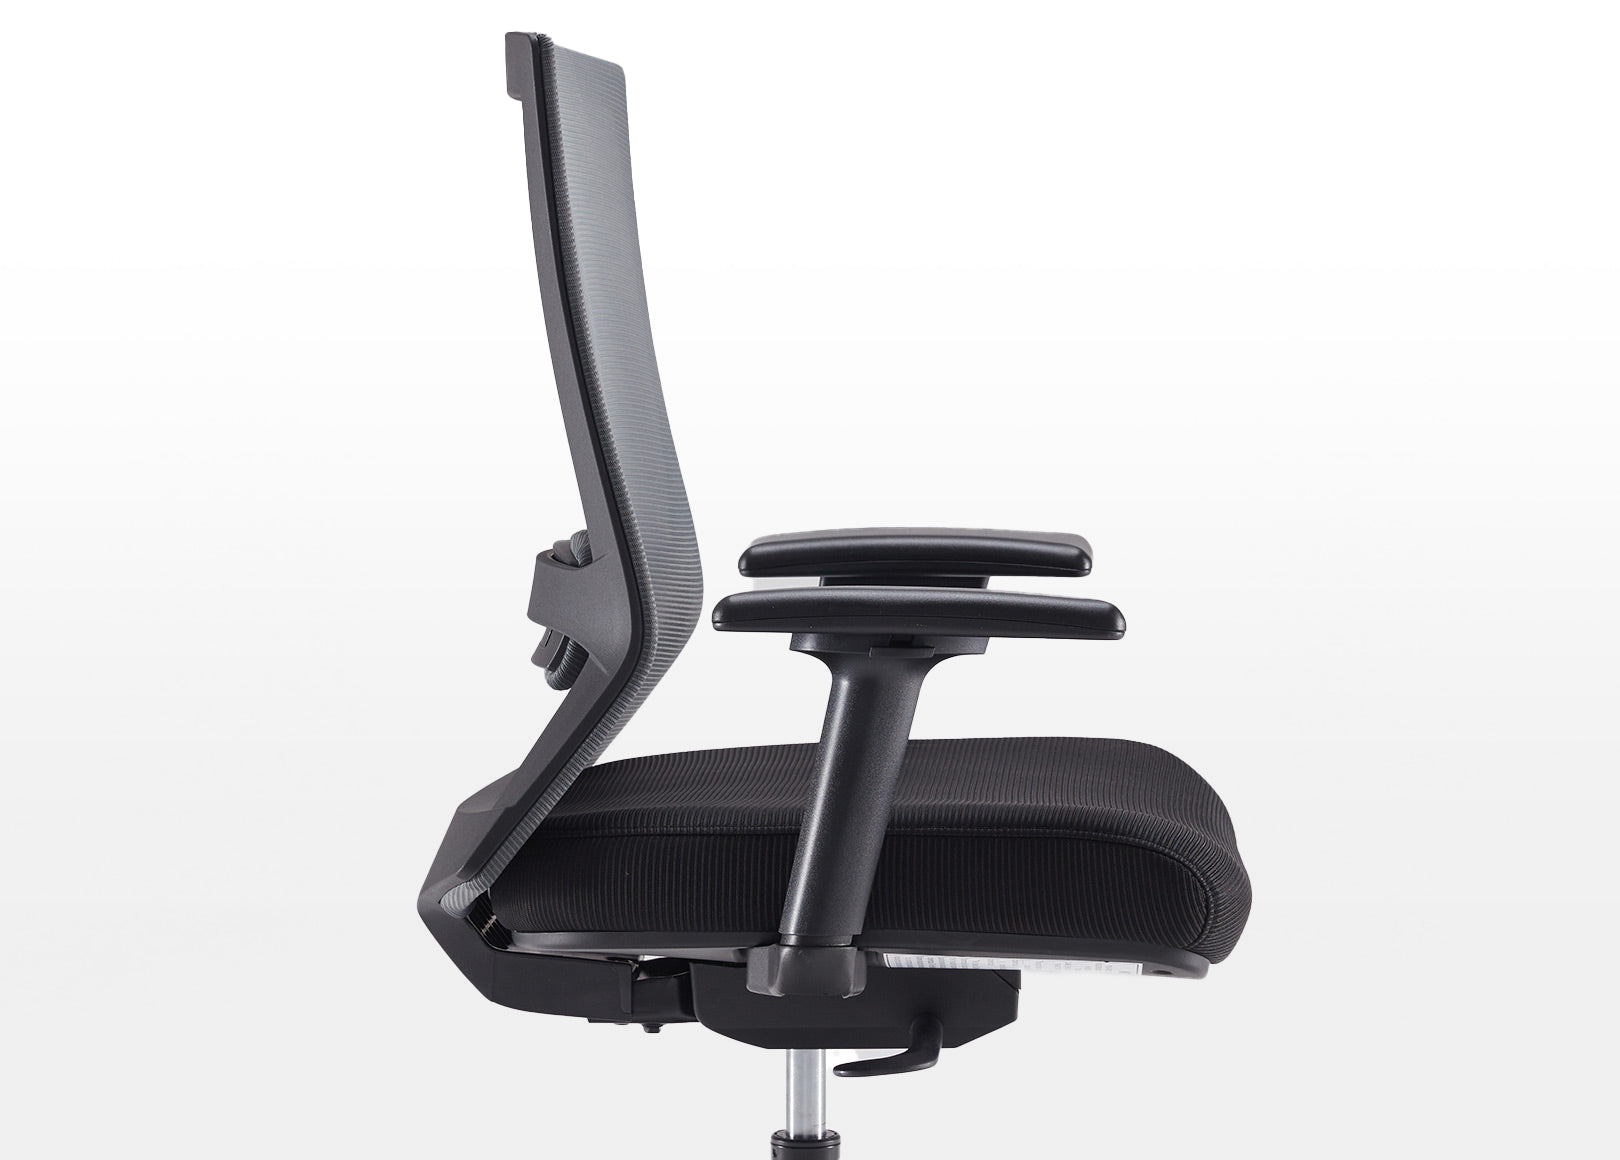 Ergonomic mesh office chair in black with adjustable armrests and tiltable backrest for ultimate comfort